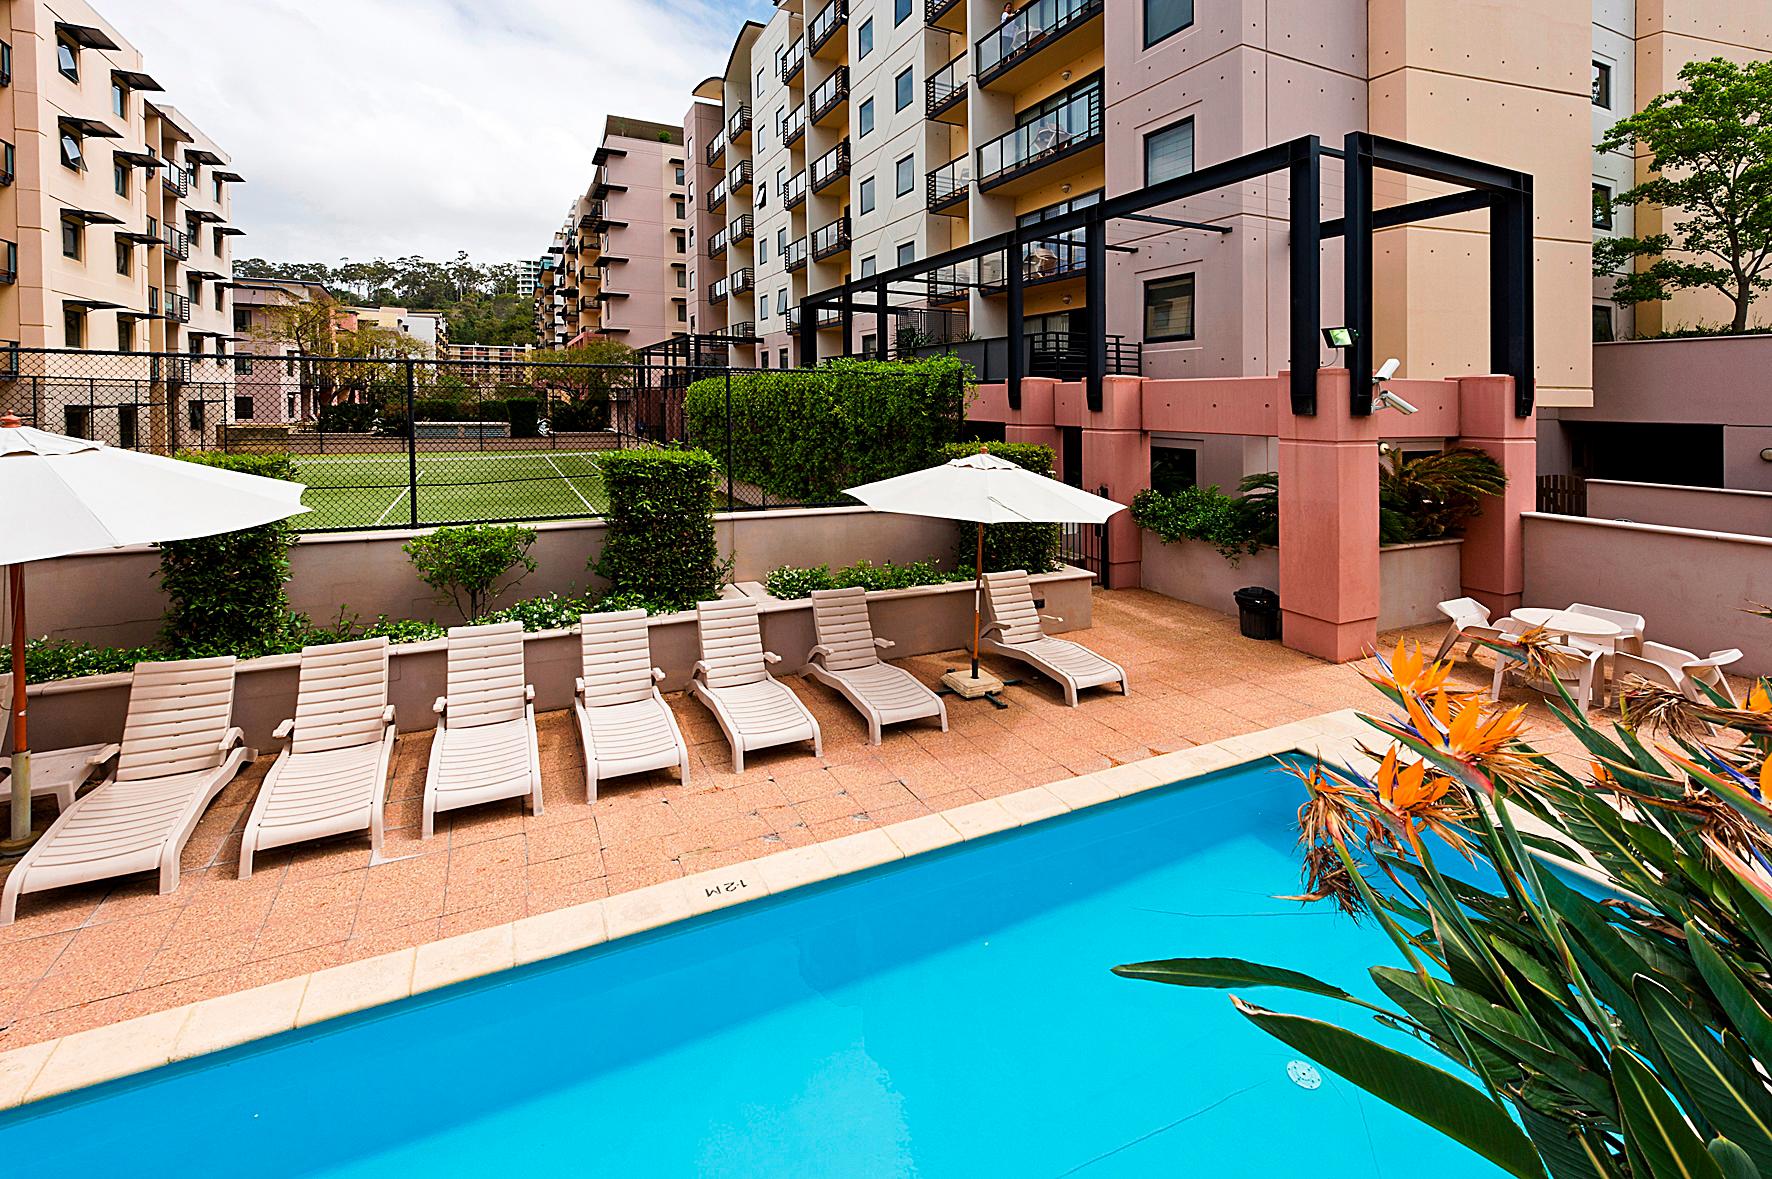 Swimming pool at Nesuto Mounts Bay Apartment Hotel Nesuto Mounts Bay Apartment Hotel Perth (08) 9213 5333